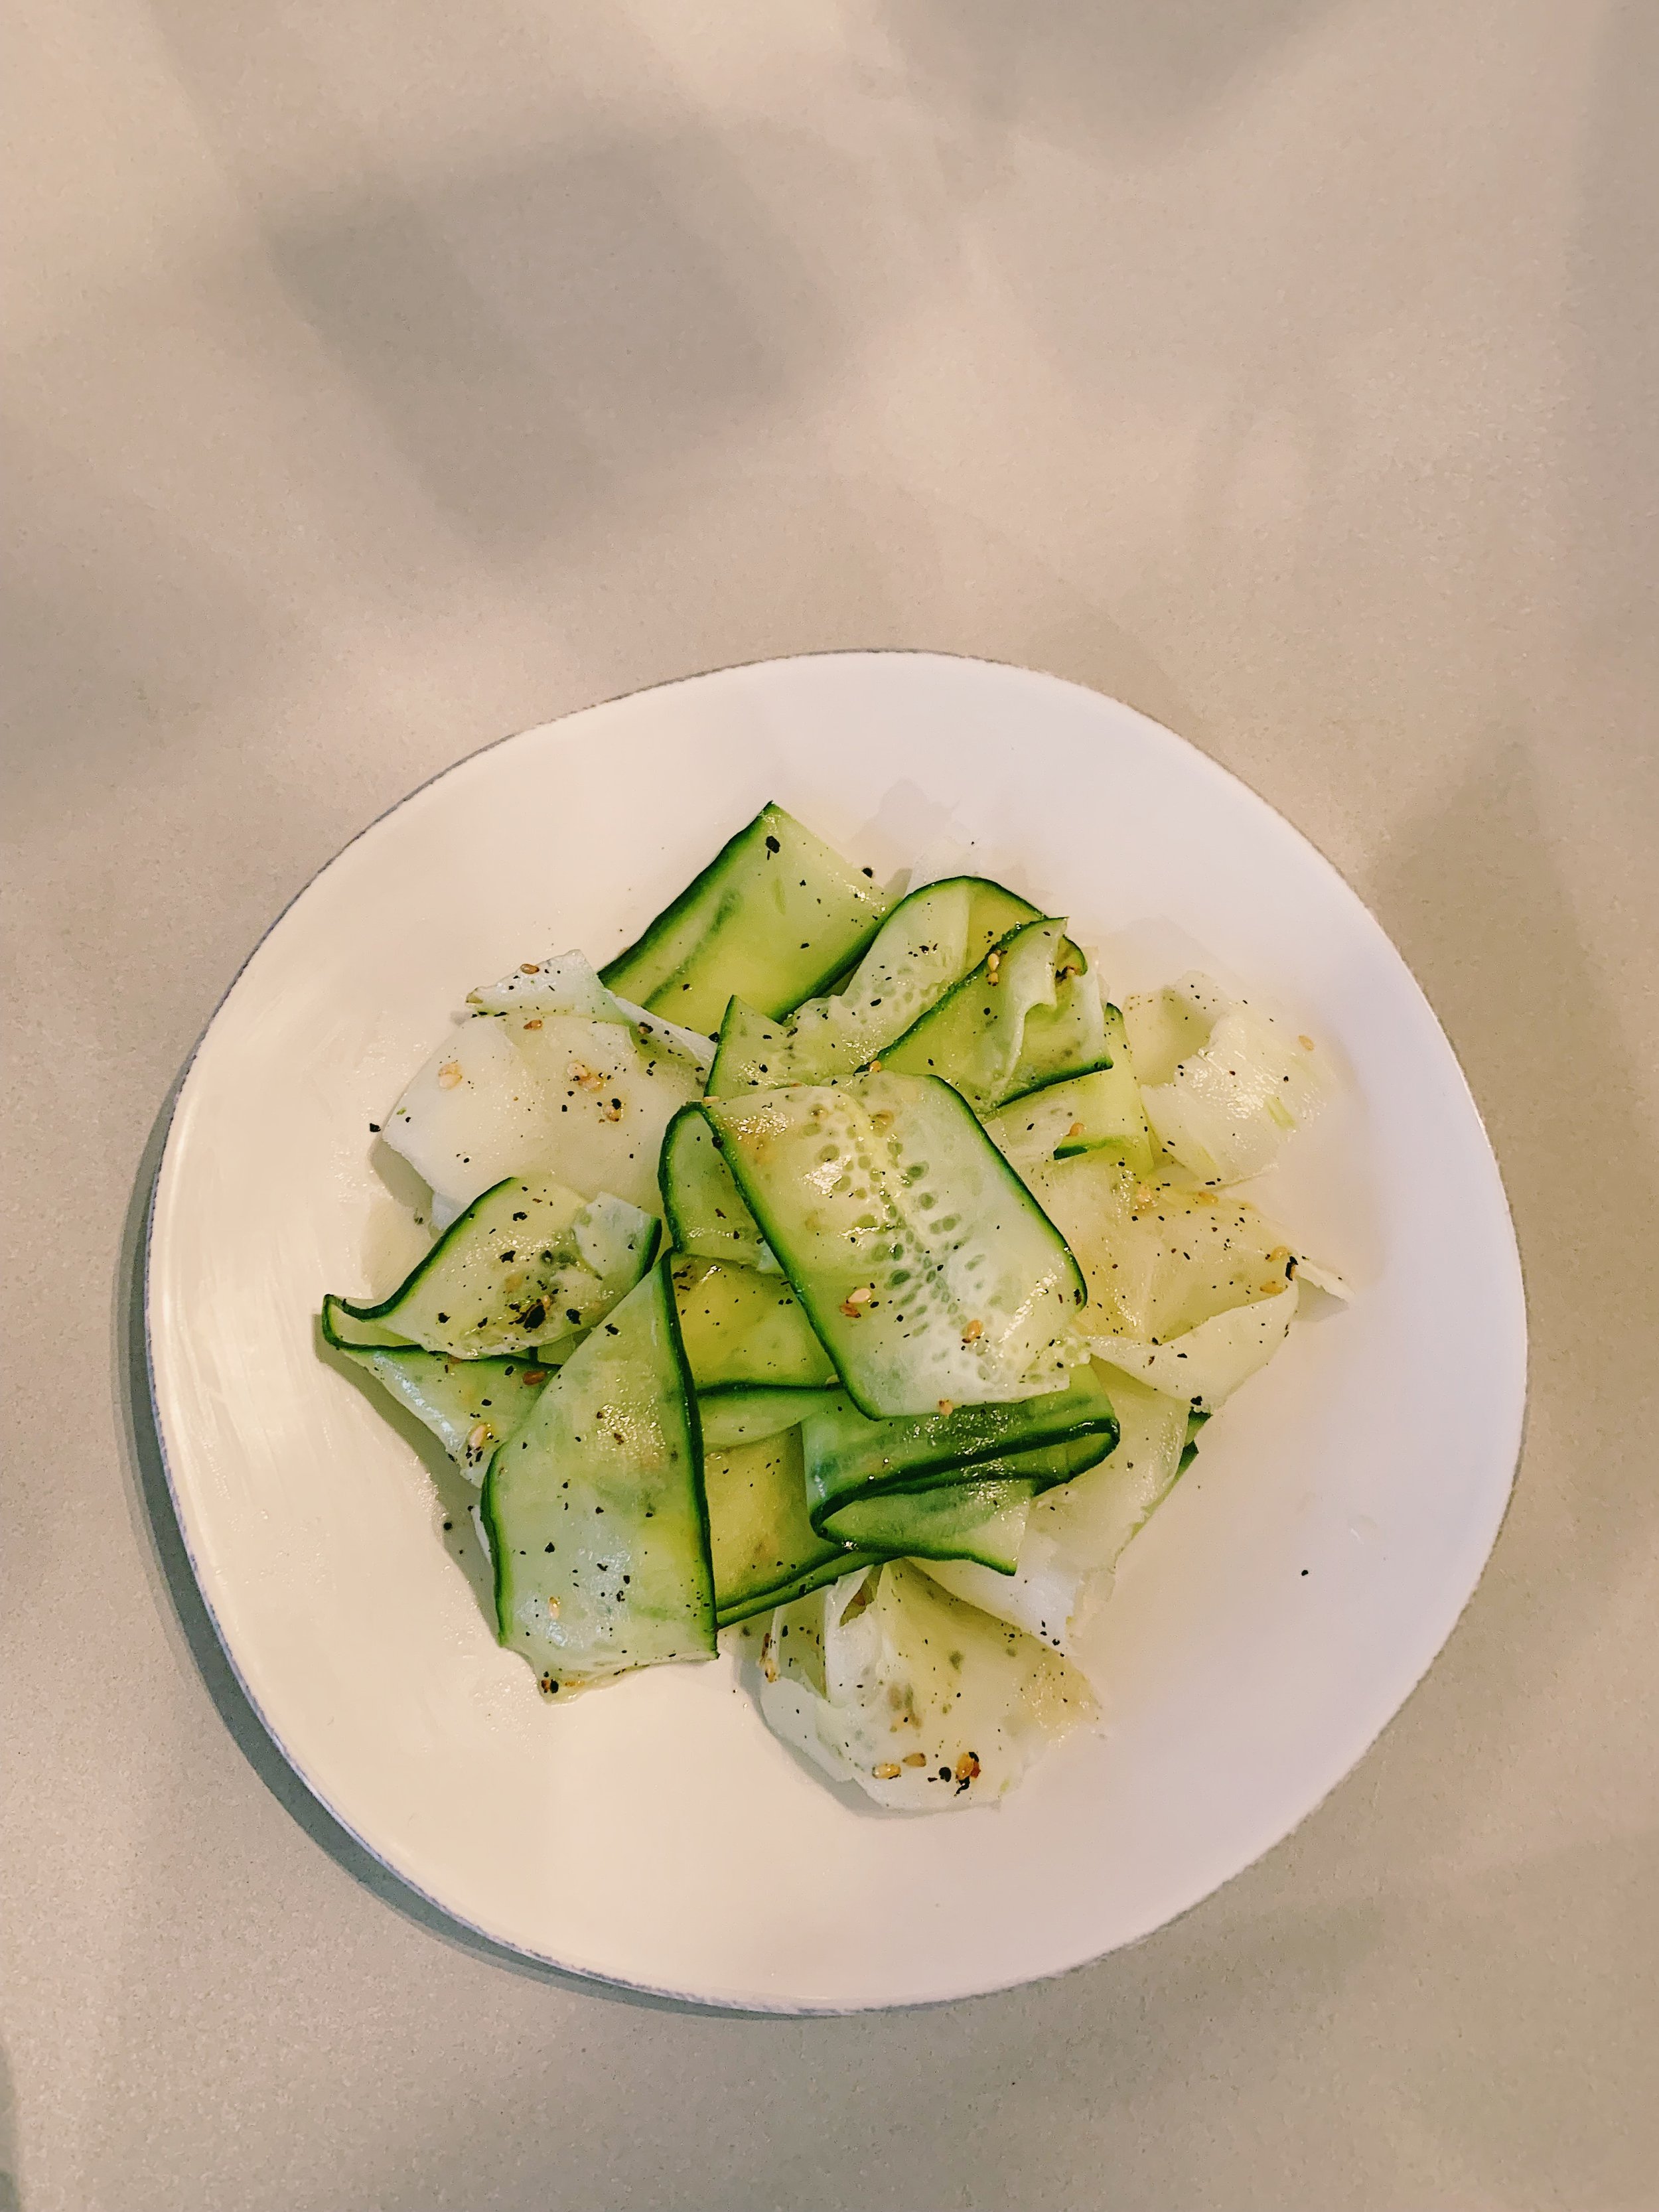 cucumbers-kohlrabi-crunchy-chili-oil-alison-roman-1.jpg